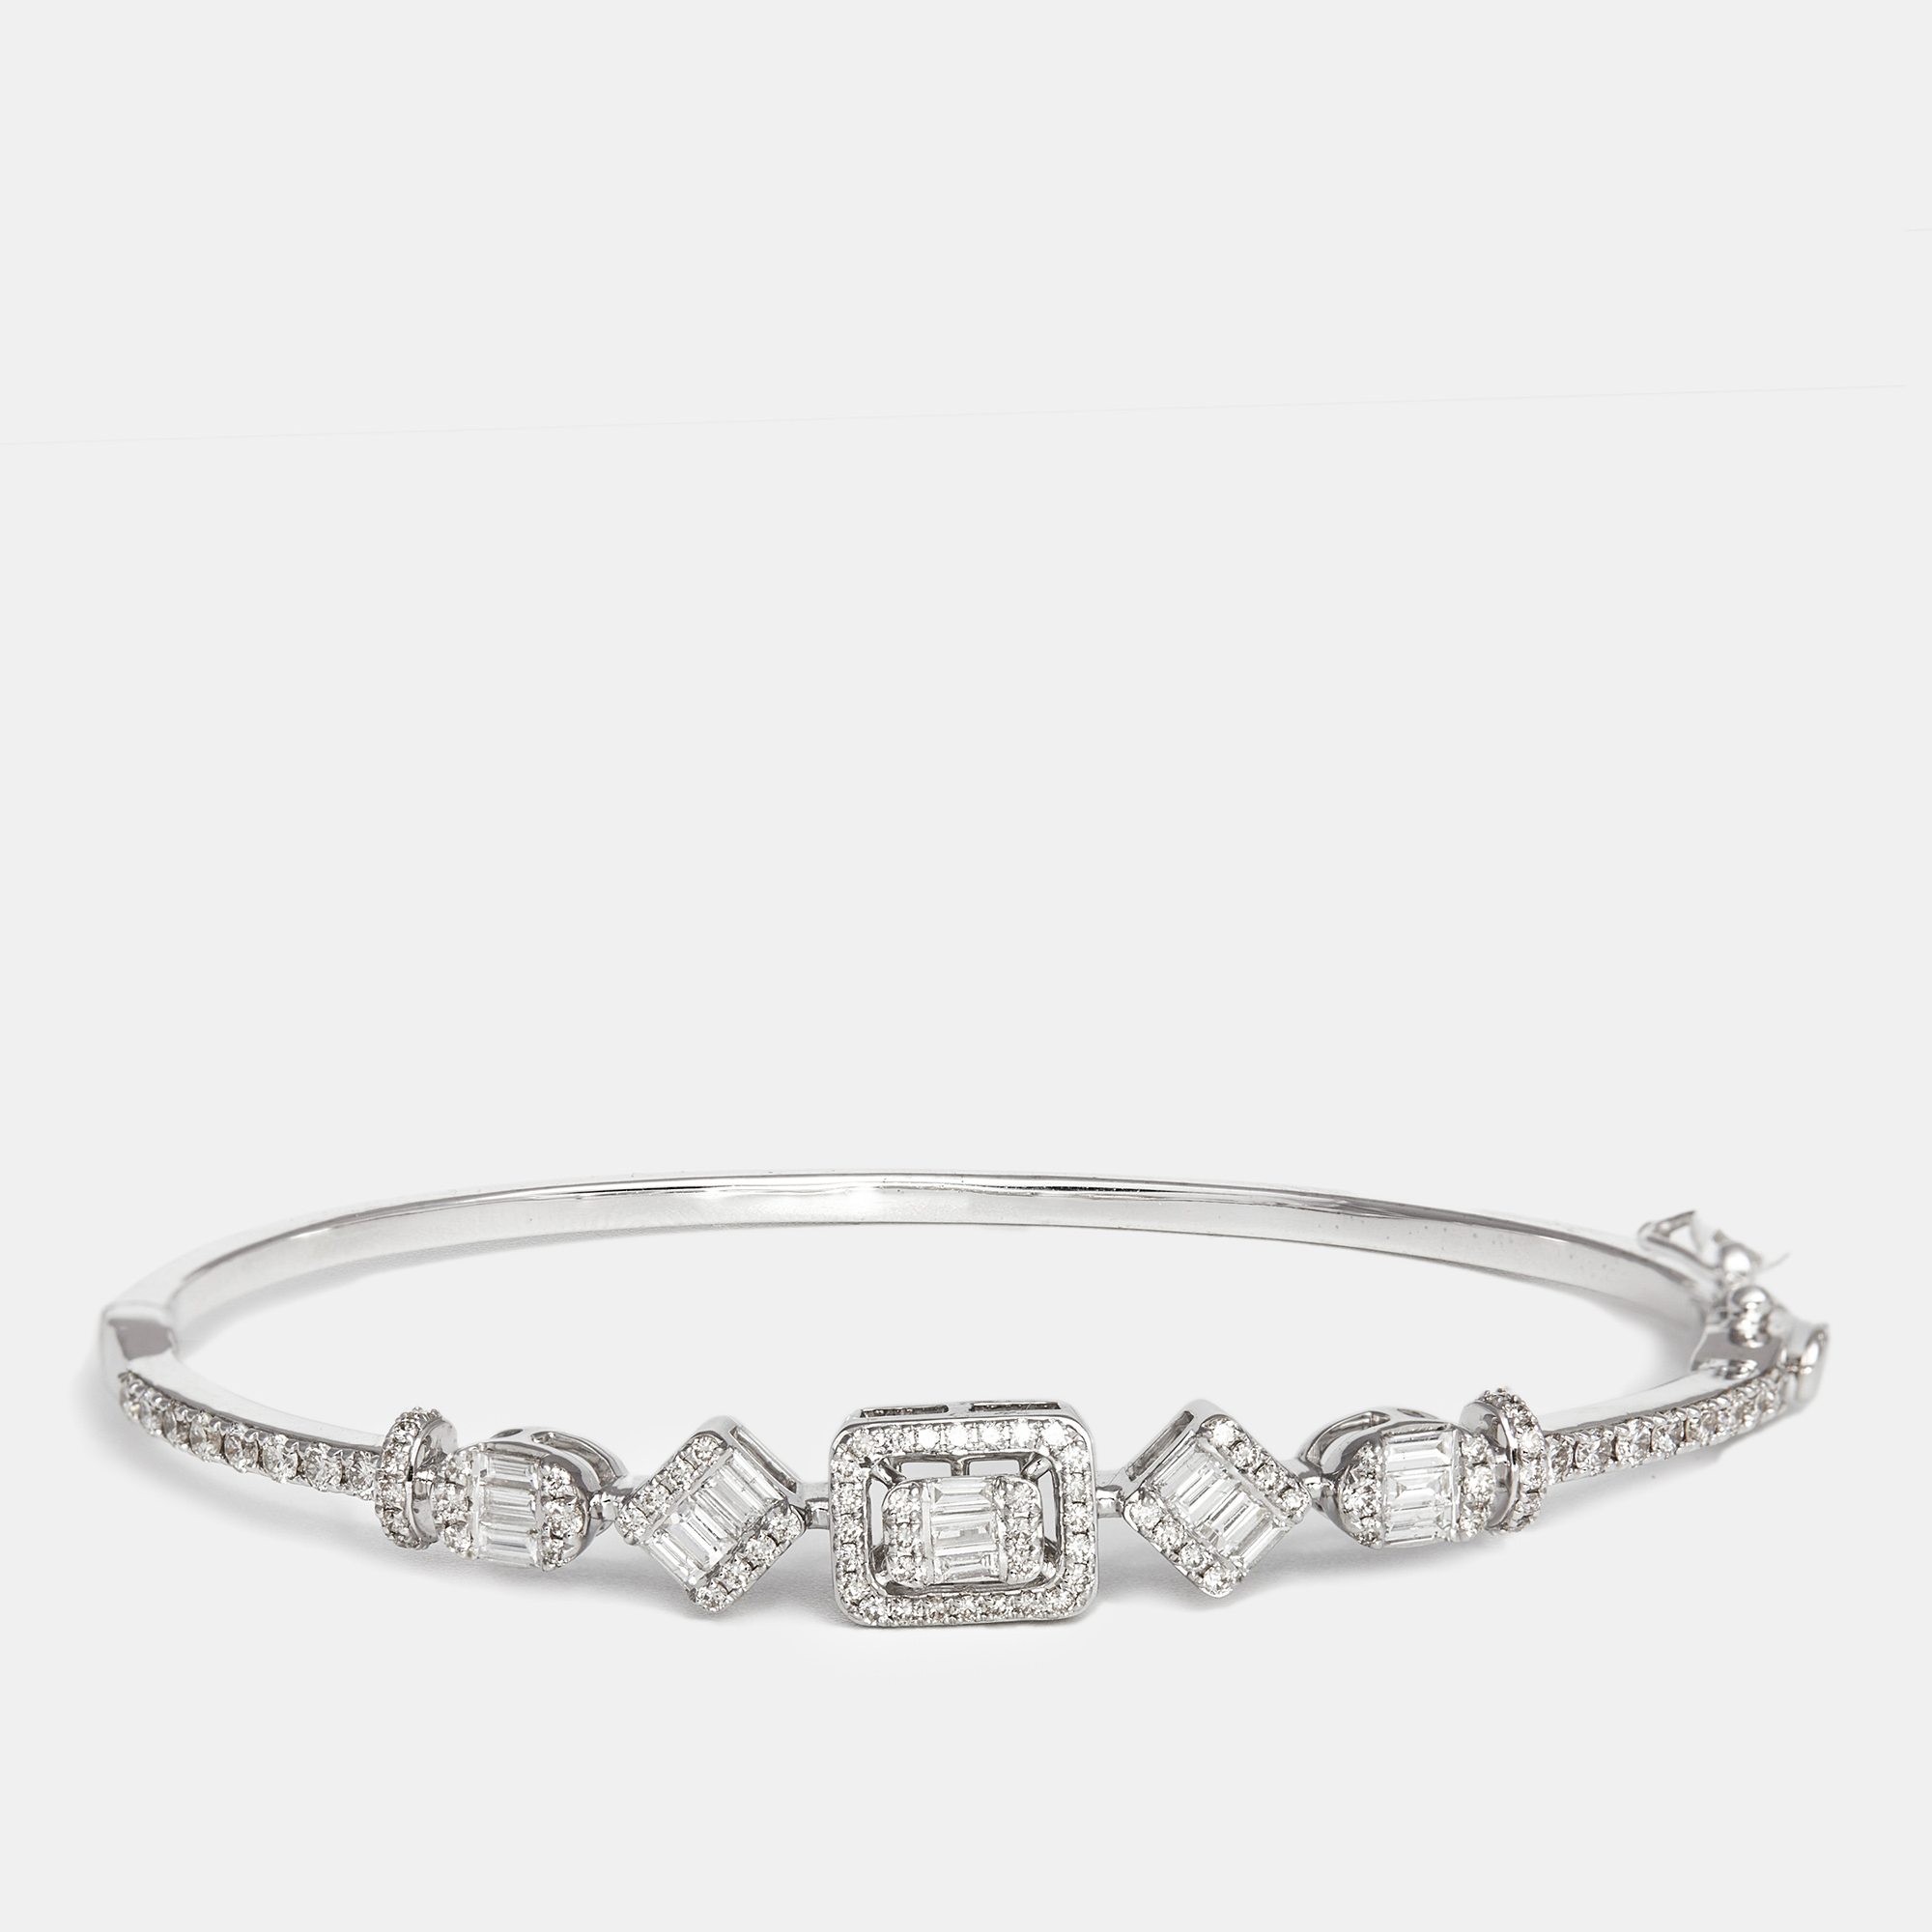 The diamond edit classy baguette and round diamonds 1.31 ct 18k white gold bracelet 16.5